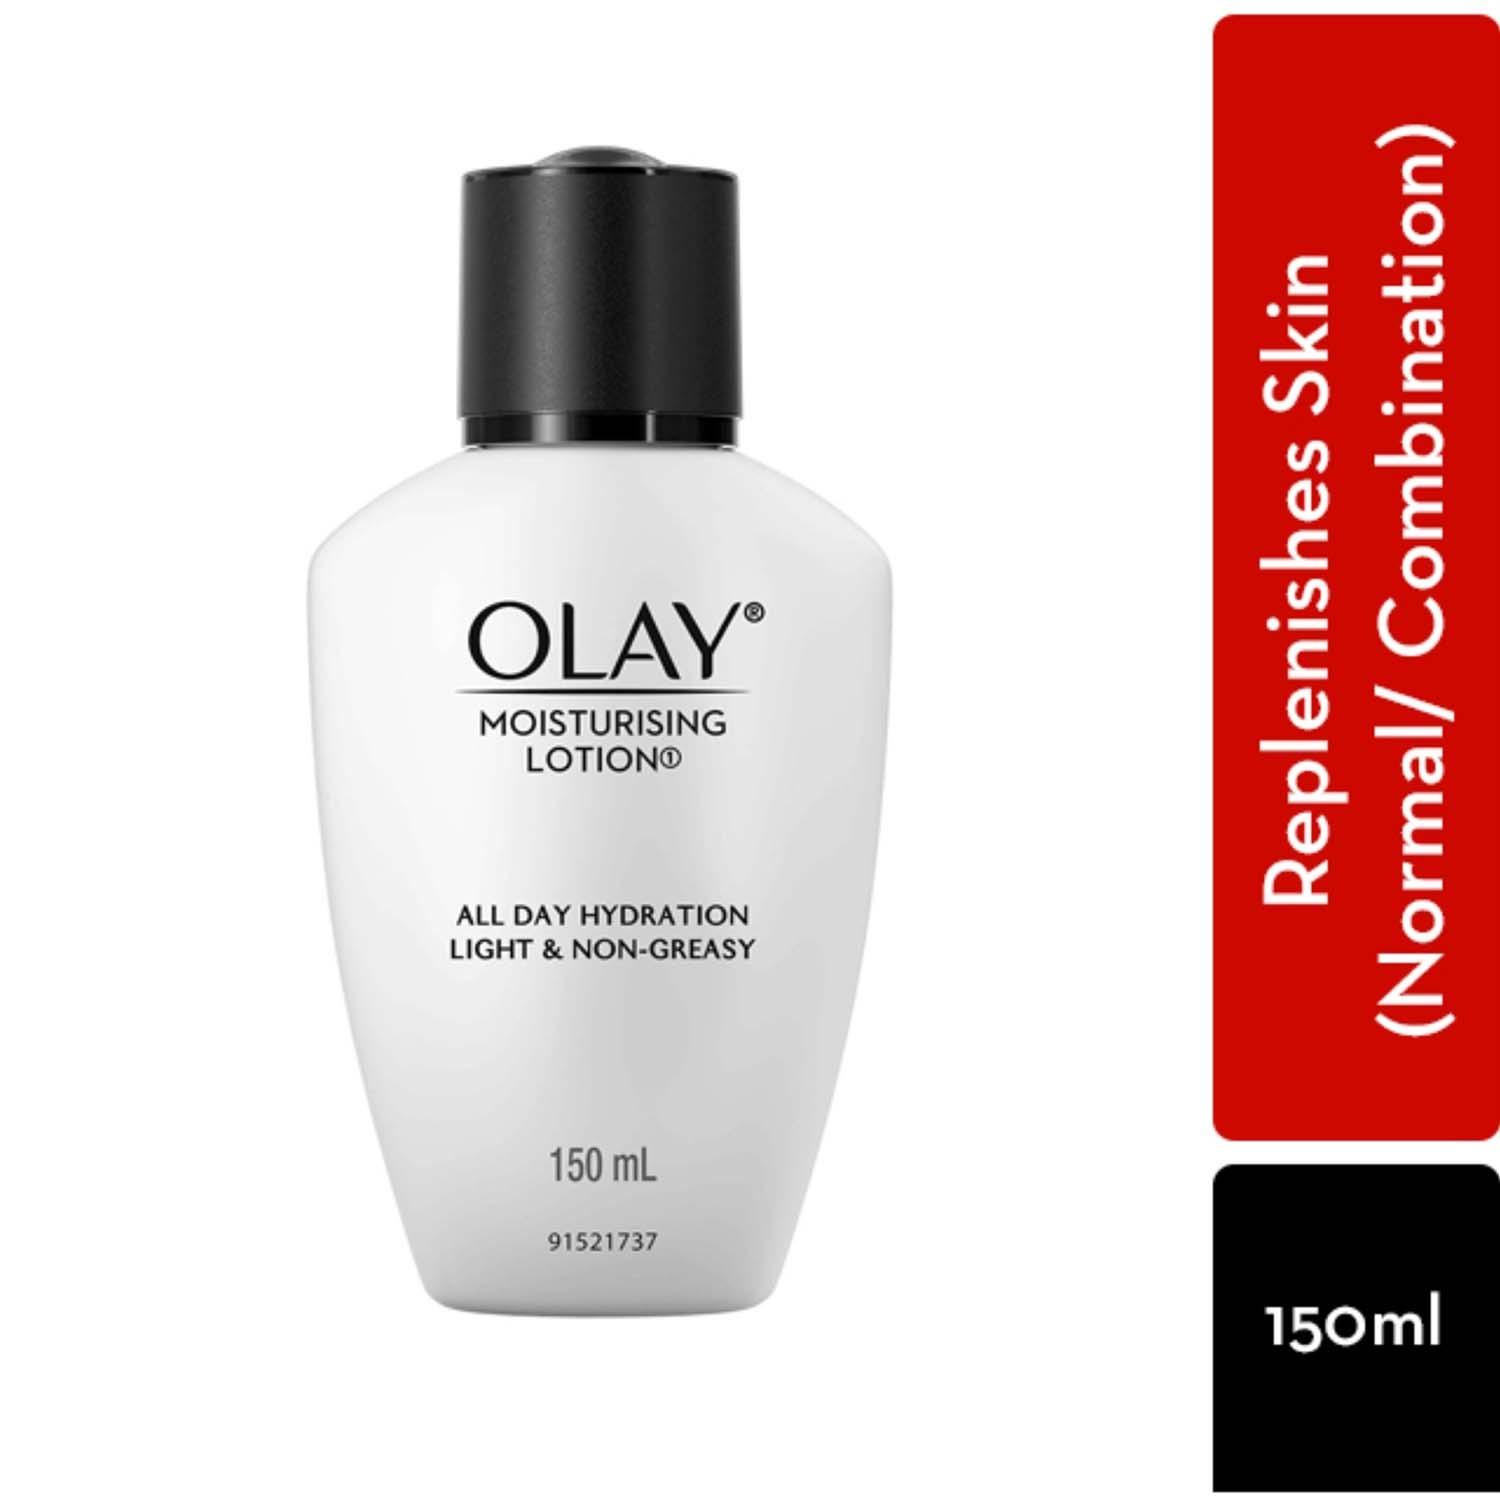 olay-moisturising-lotion-(150ml)